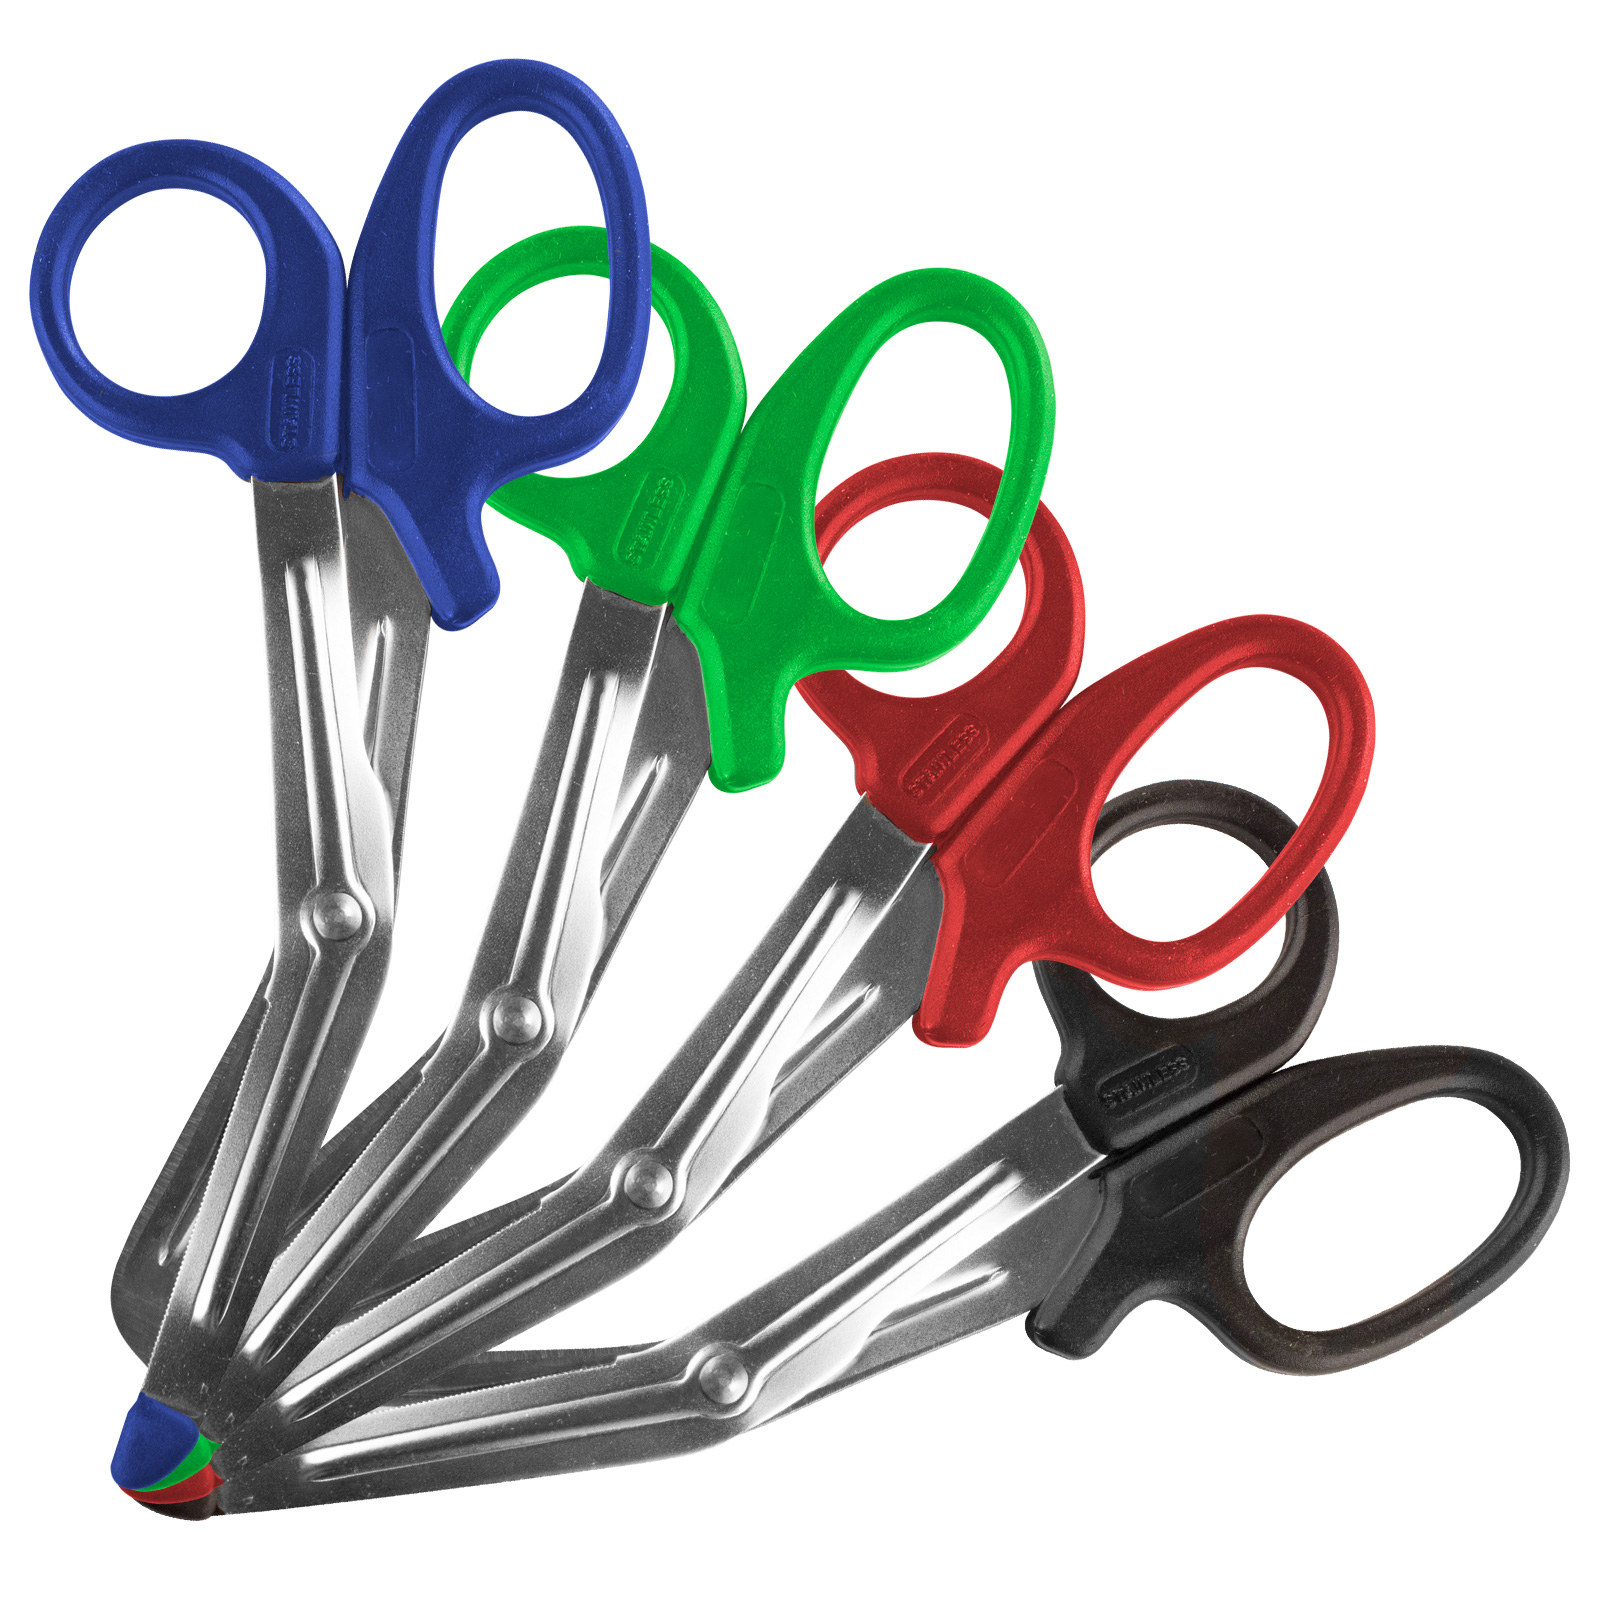 https://mdpocket.com/image/catalog/Pocket_Equipment/Scissors/6_inch/Small_Scissors_4.jpg